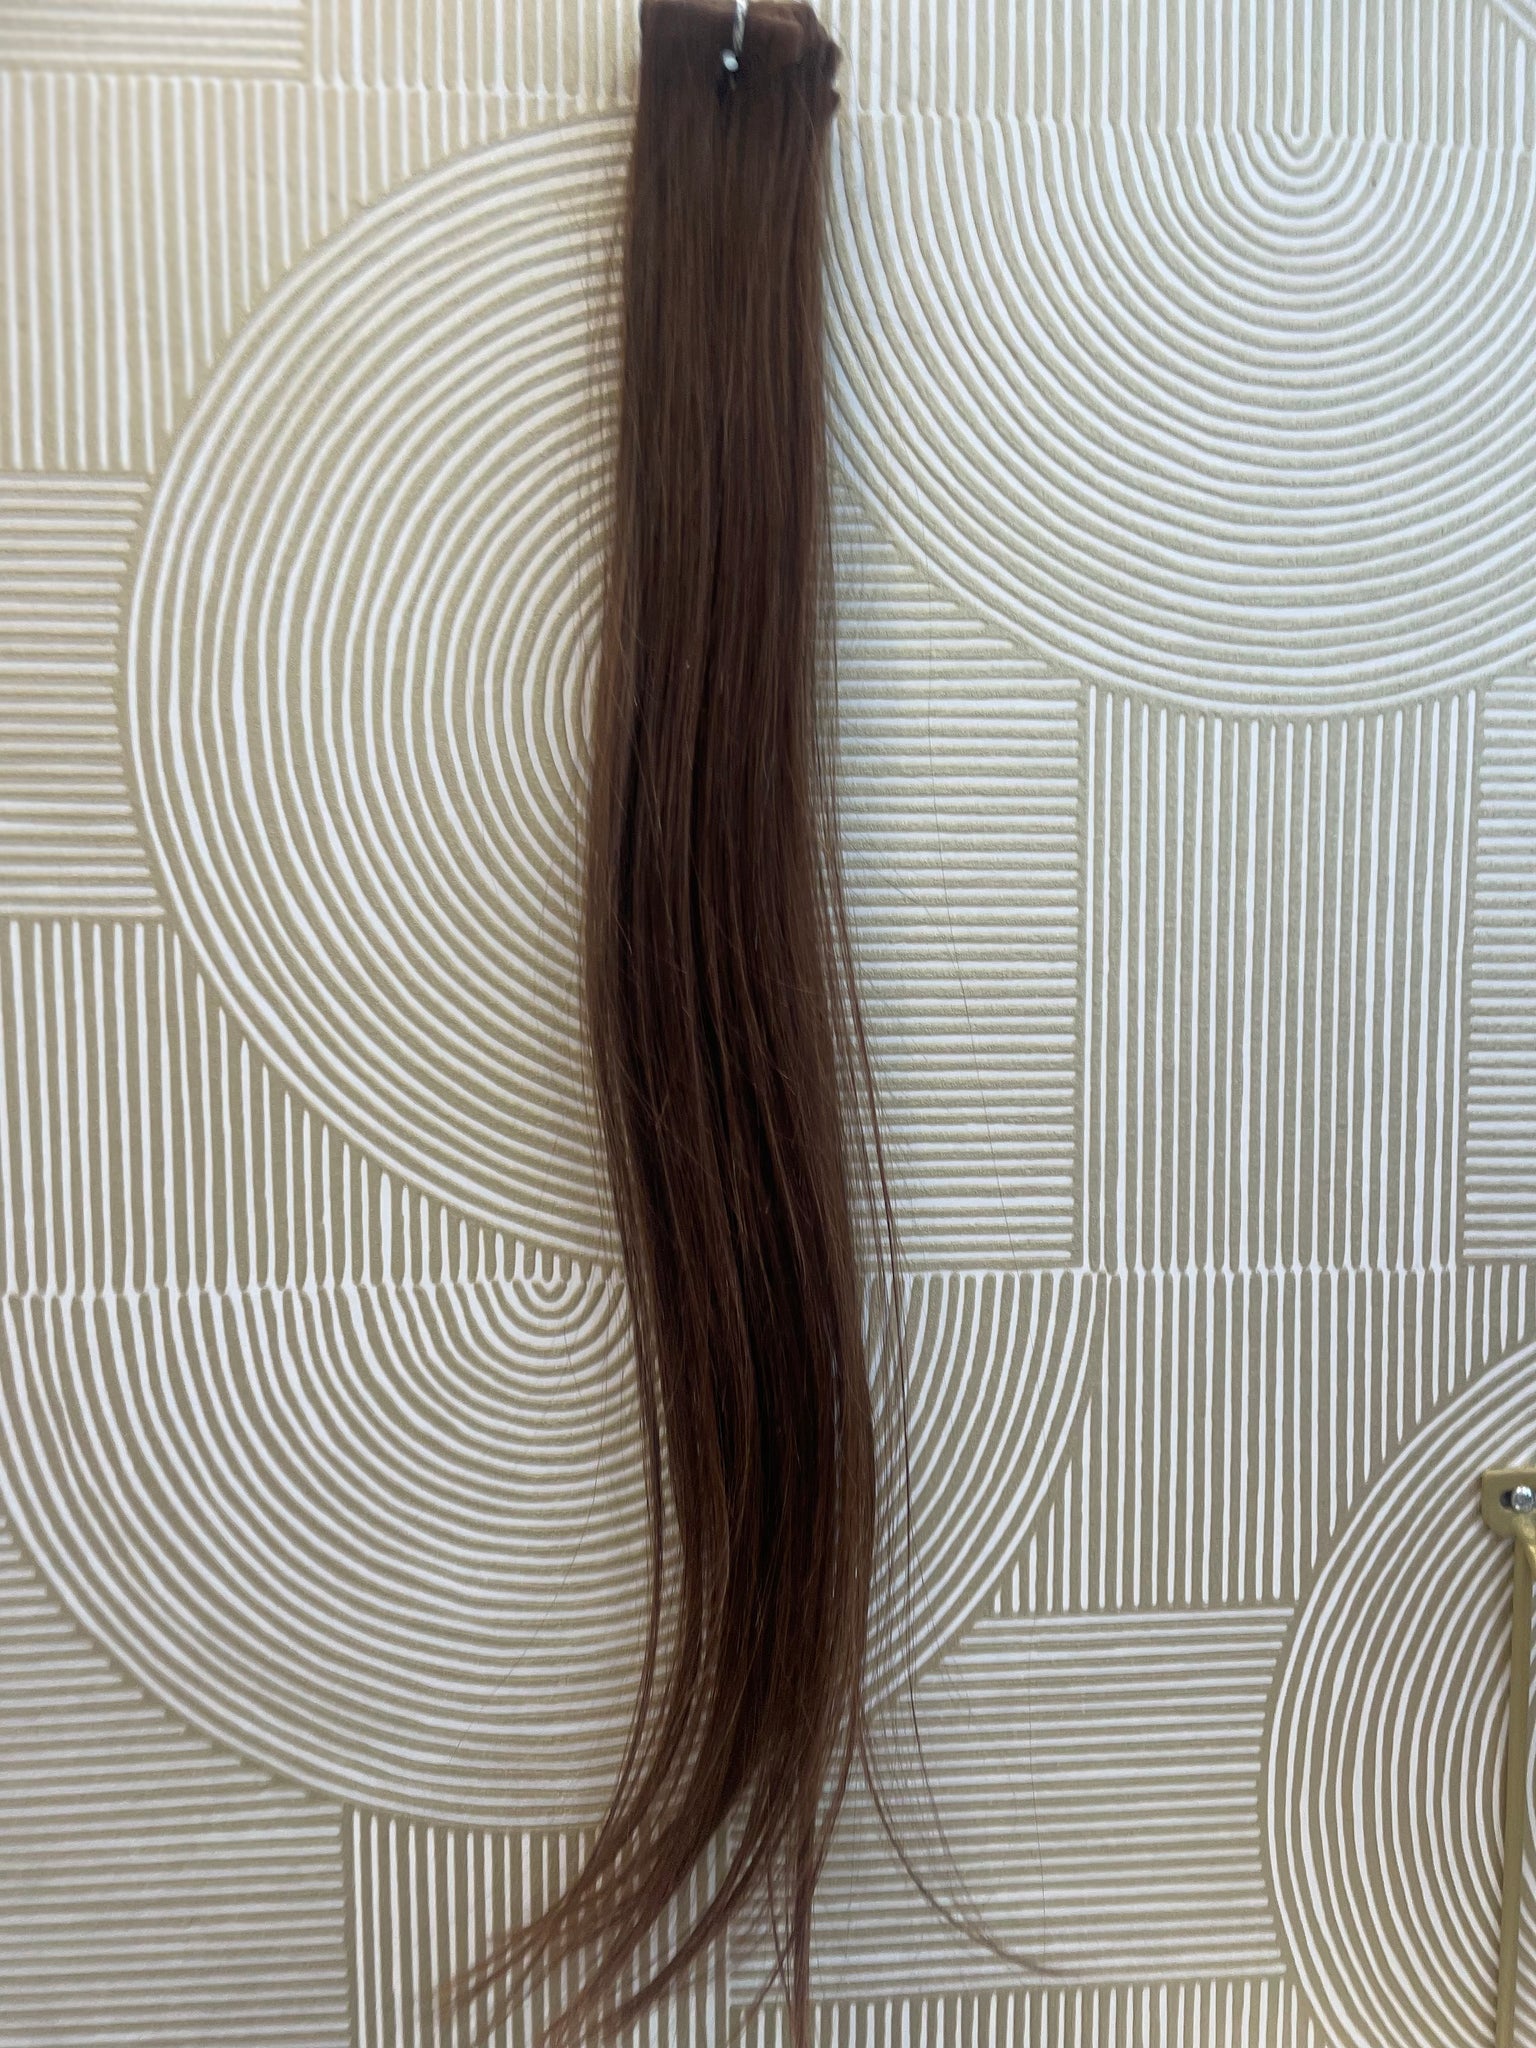 Extensions Tape invisible 50 gram (3) 55 cm European hair